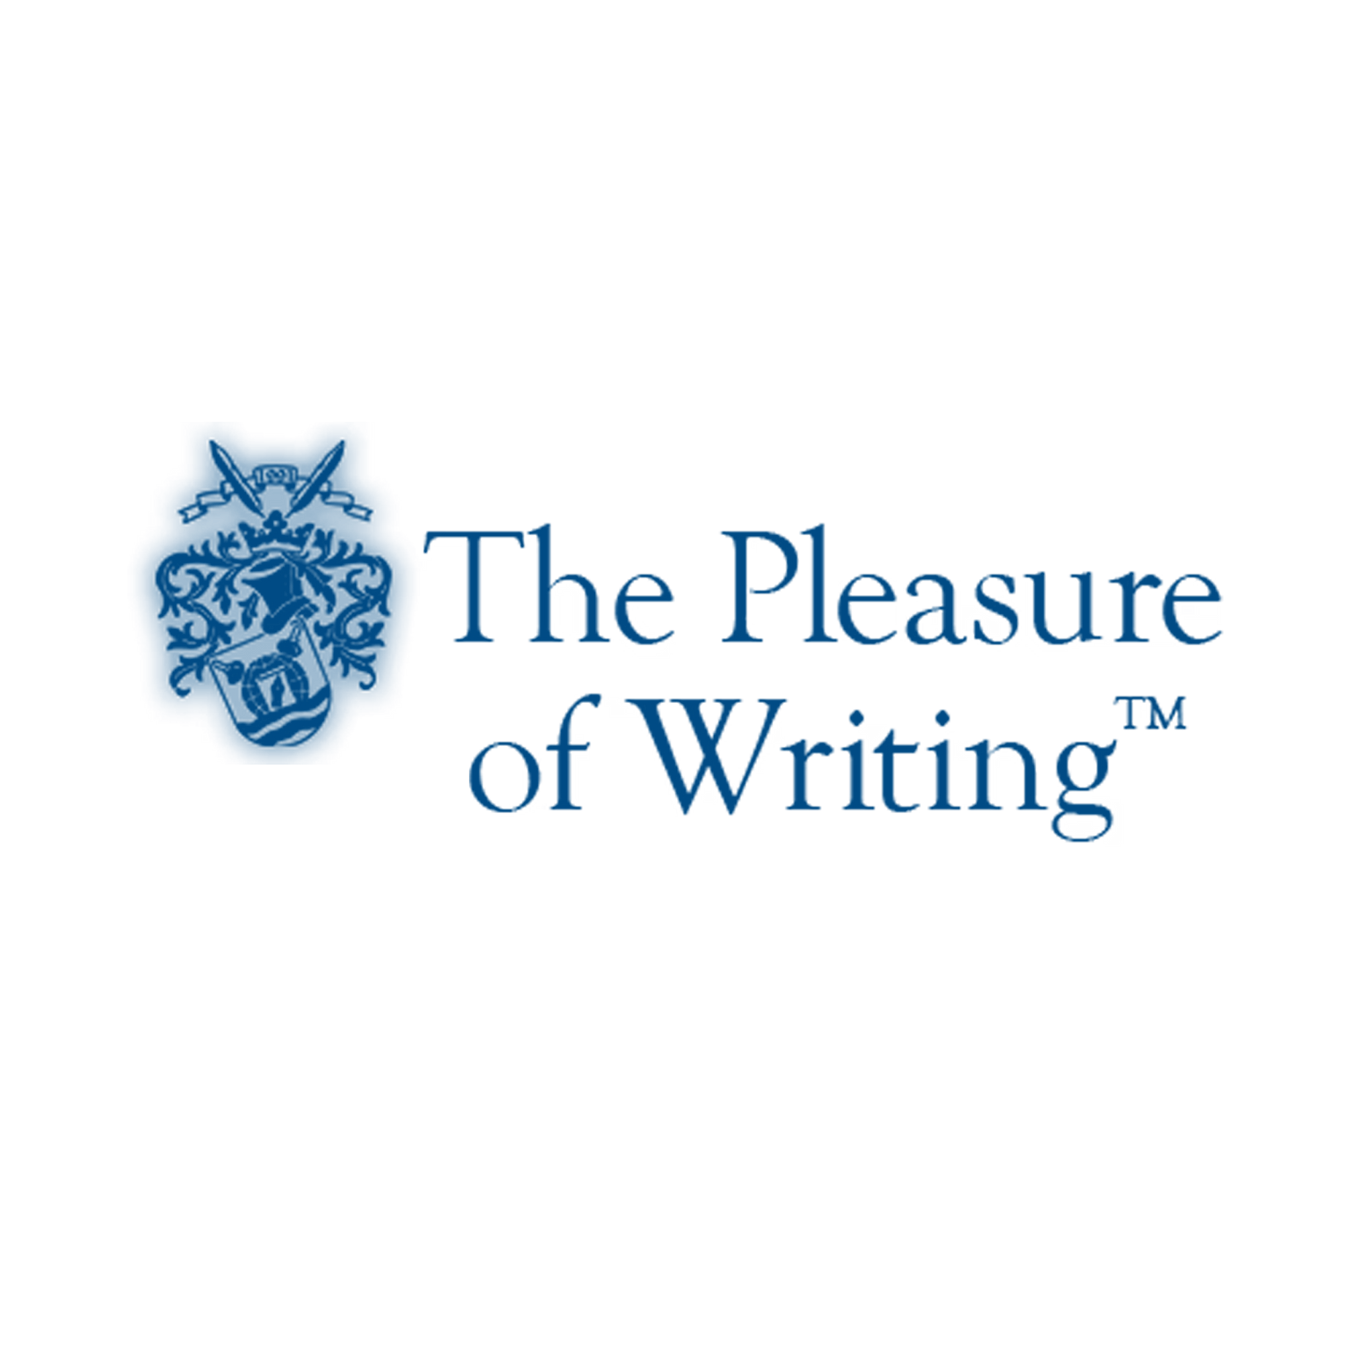 The Pleasure of Writing